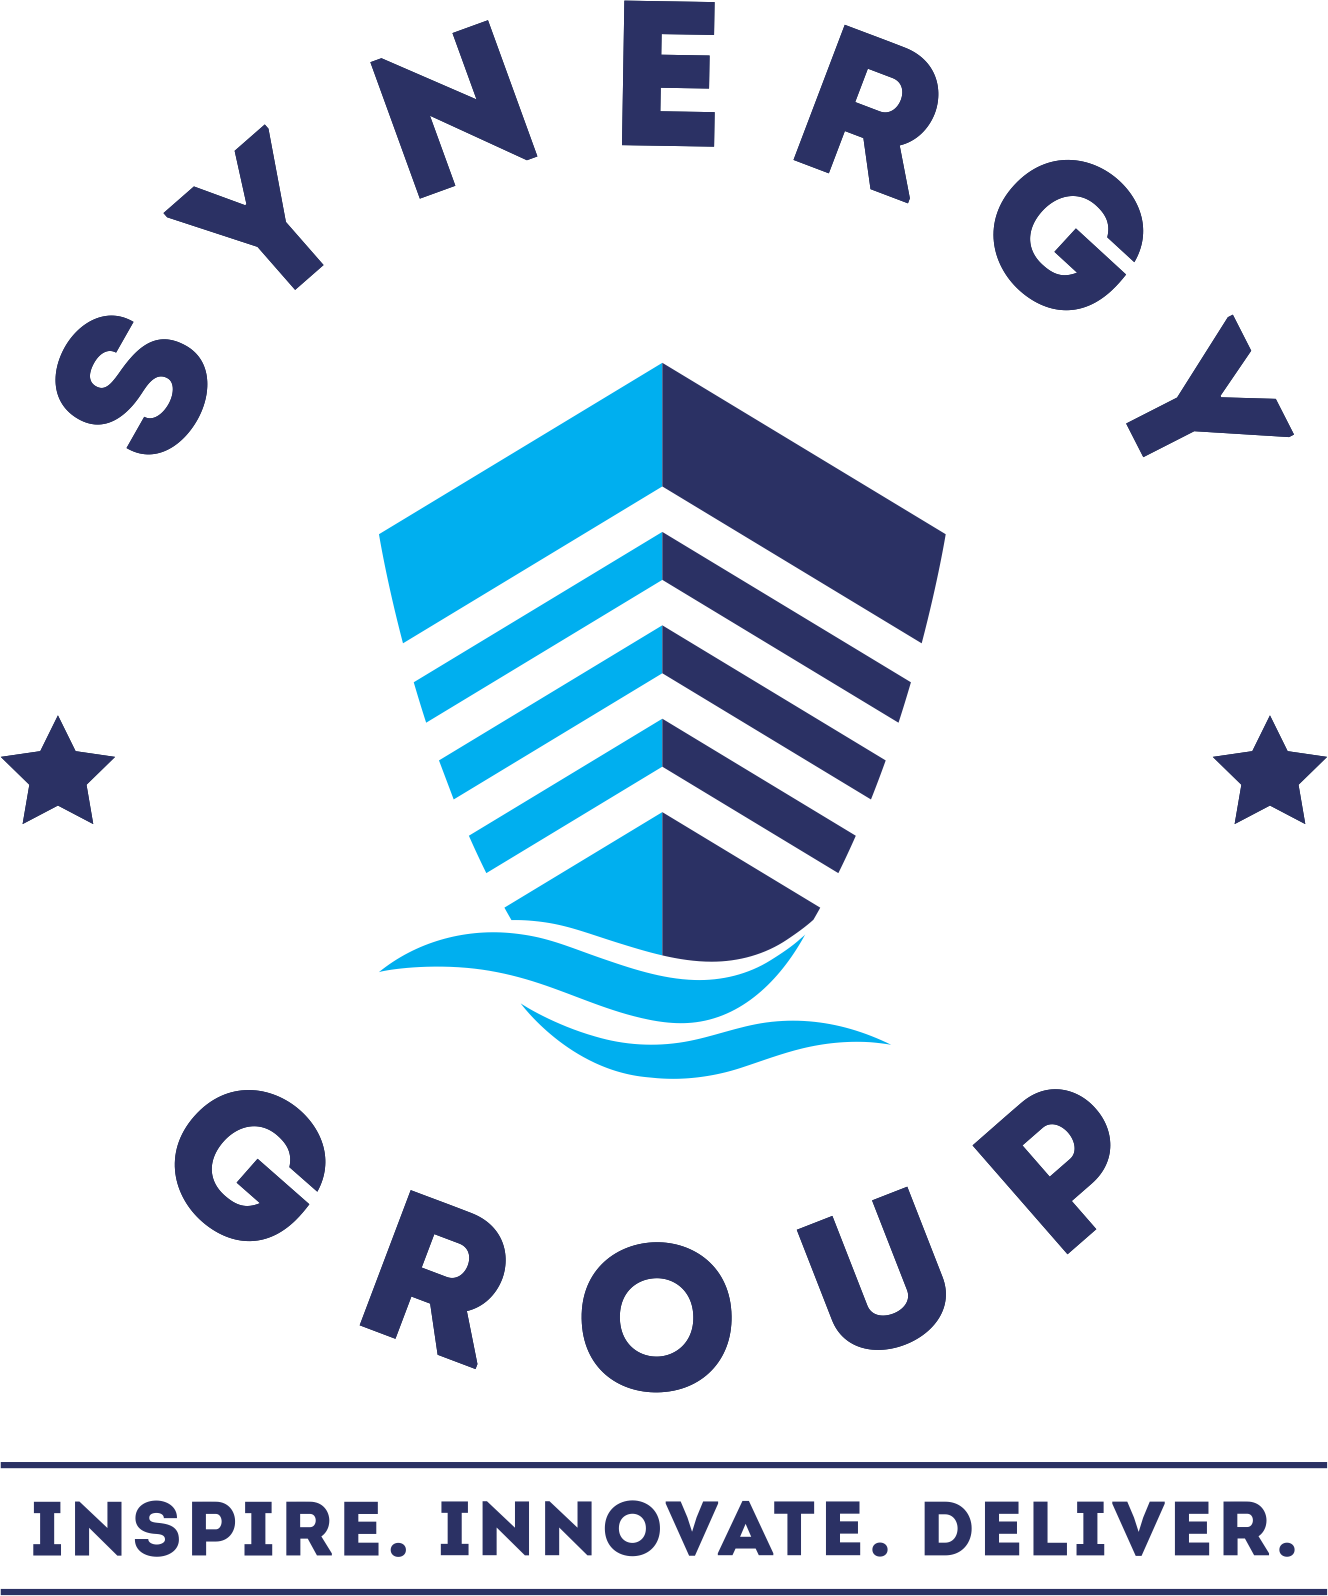 synergy company colorado